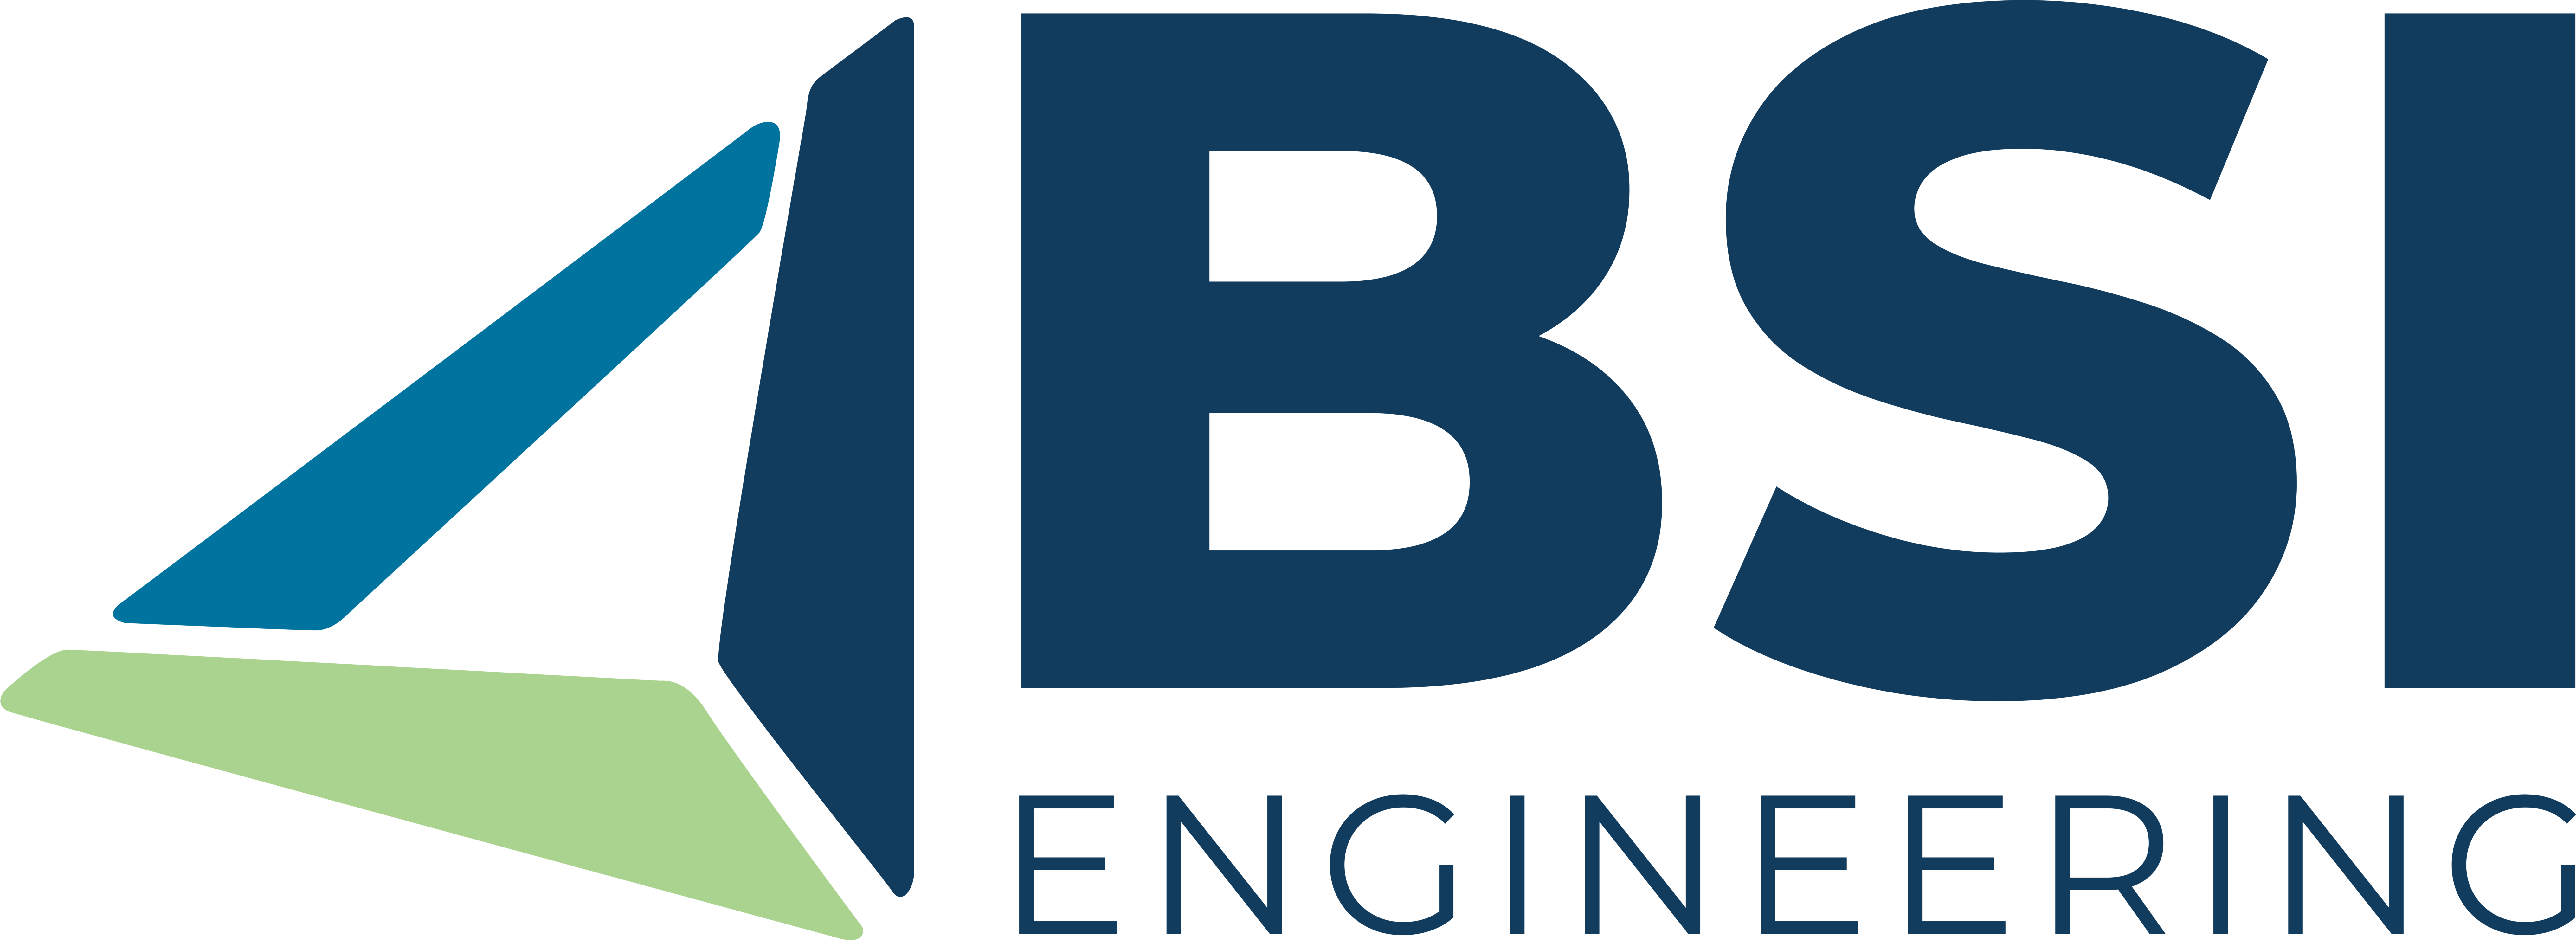 BSI Engineering logo